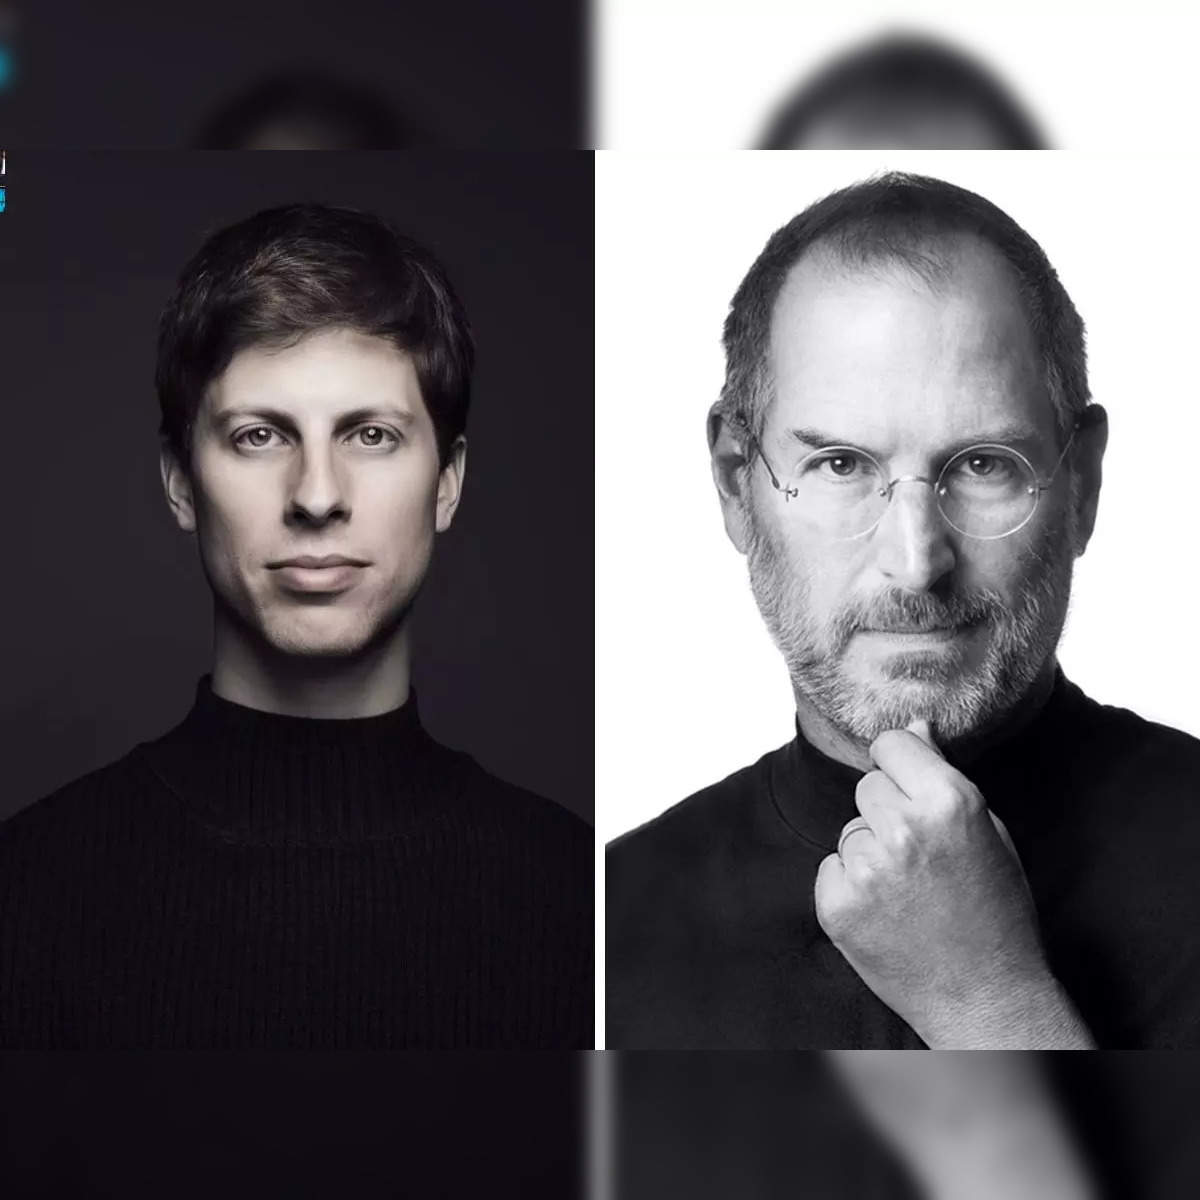 sam altman news: 'It's giving Steve Jobs vibes': Open AI fires CEO